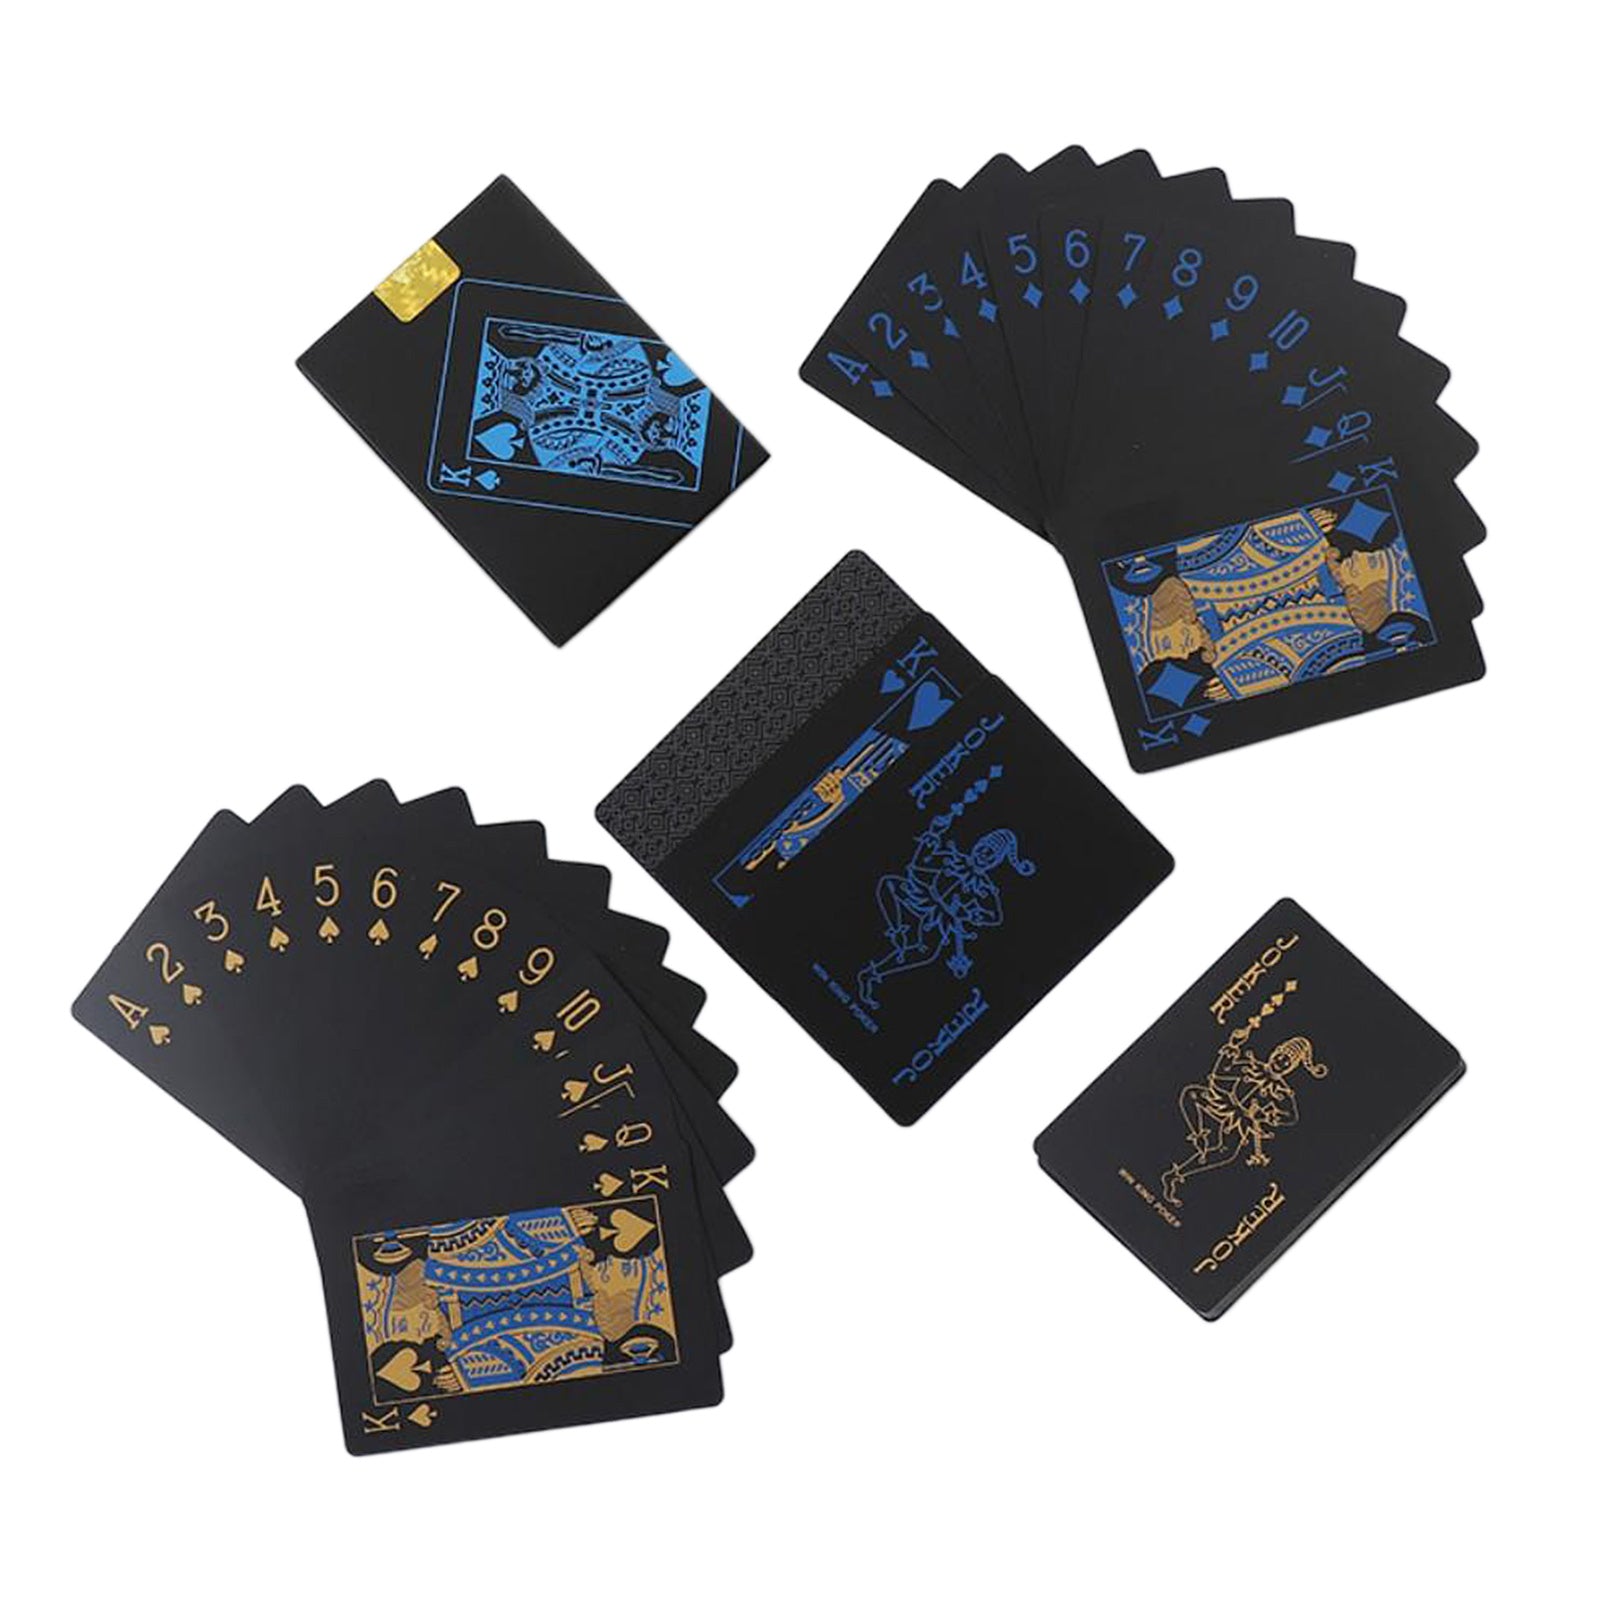 Waterproof PVC Playing Cards Black Poker Party Magic Game Fun Blue Gold